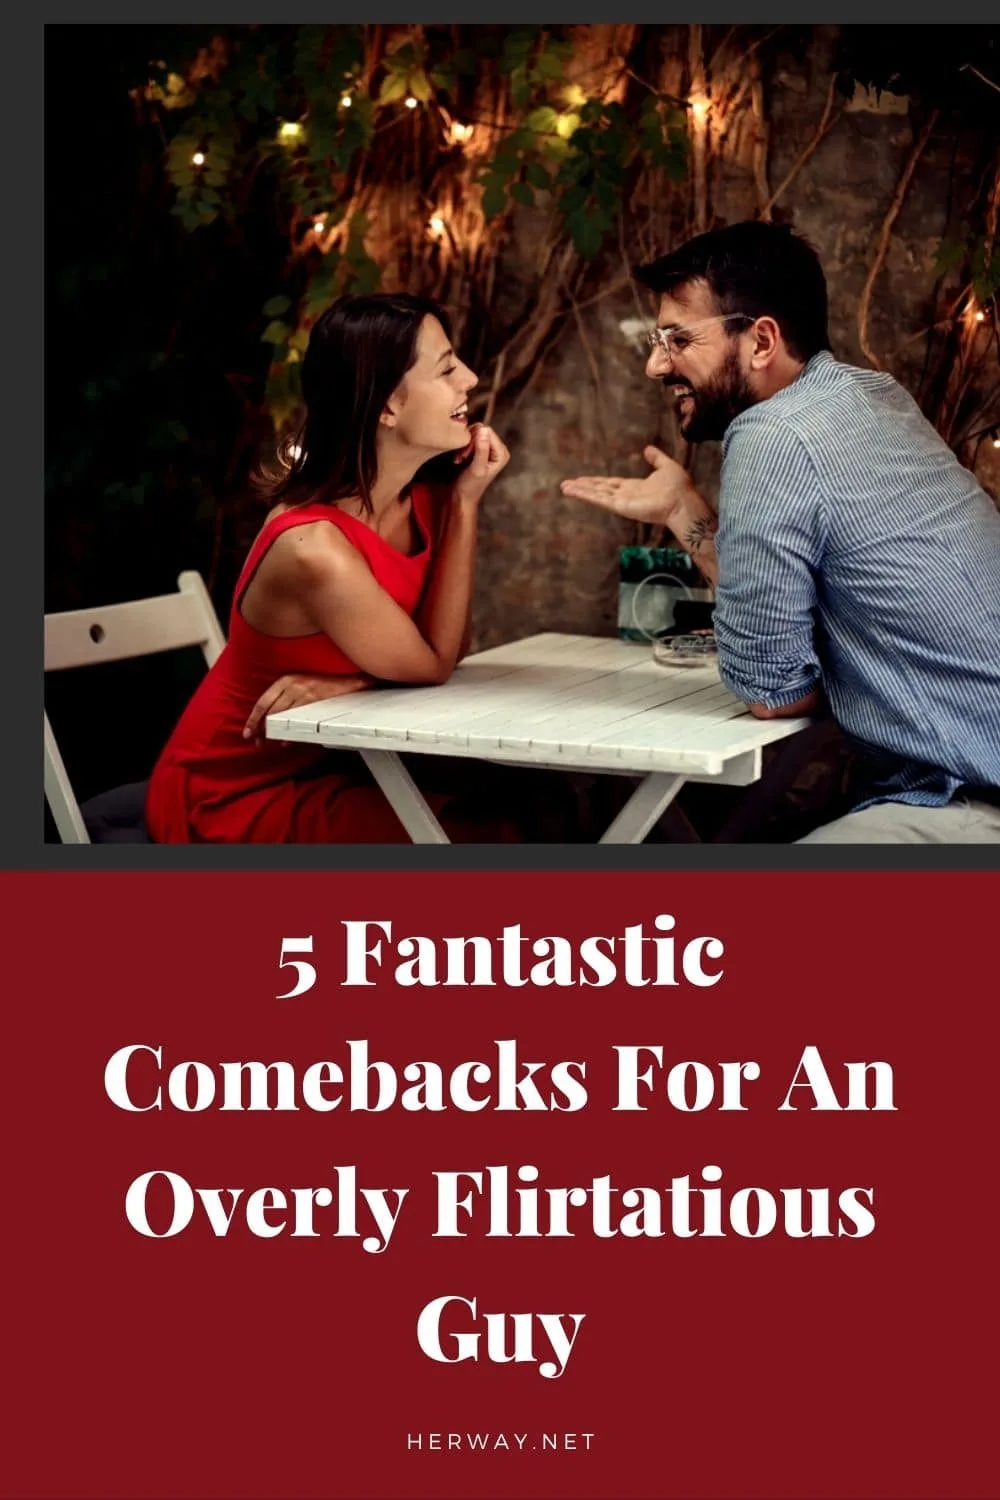 5 Fantastic Comebacks For An Overly Flirtatious Guy